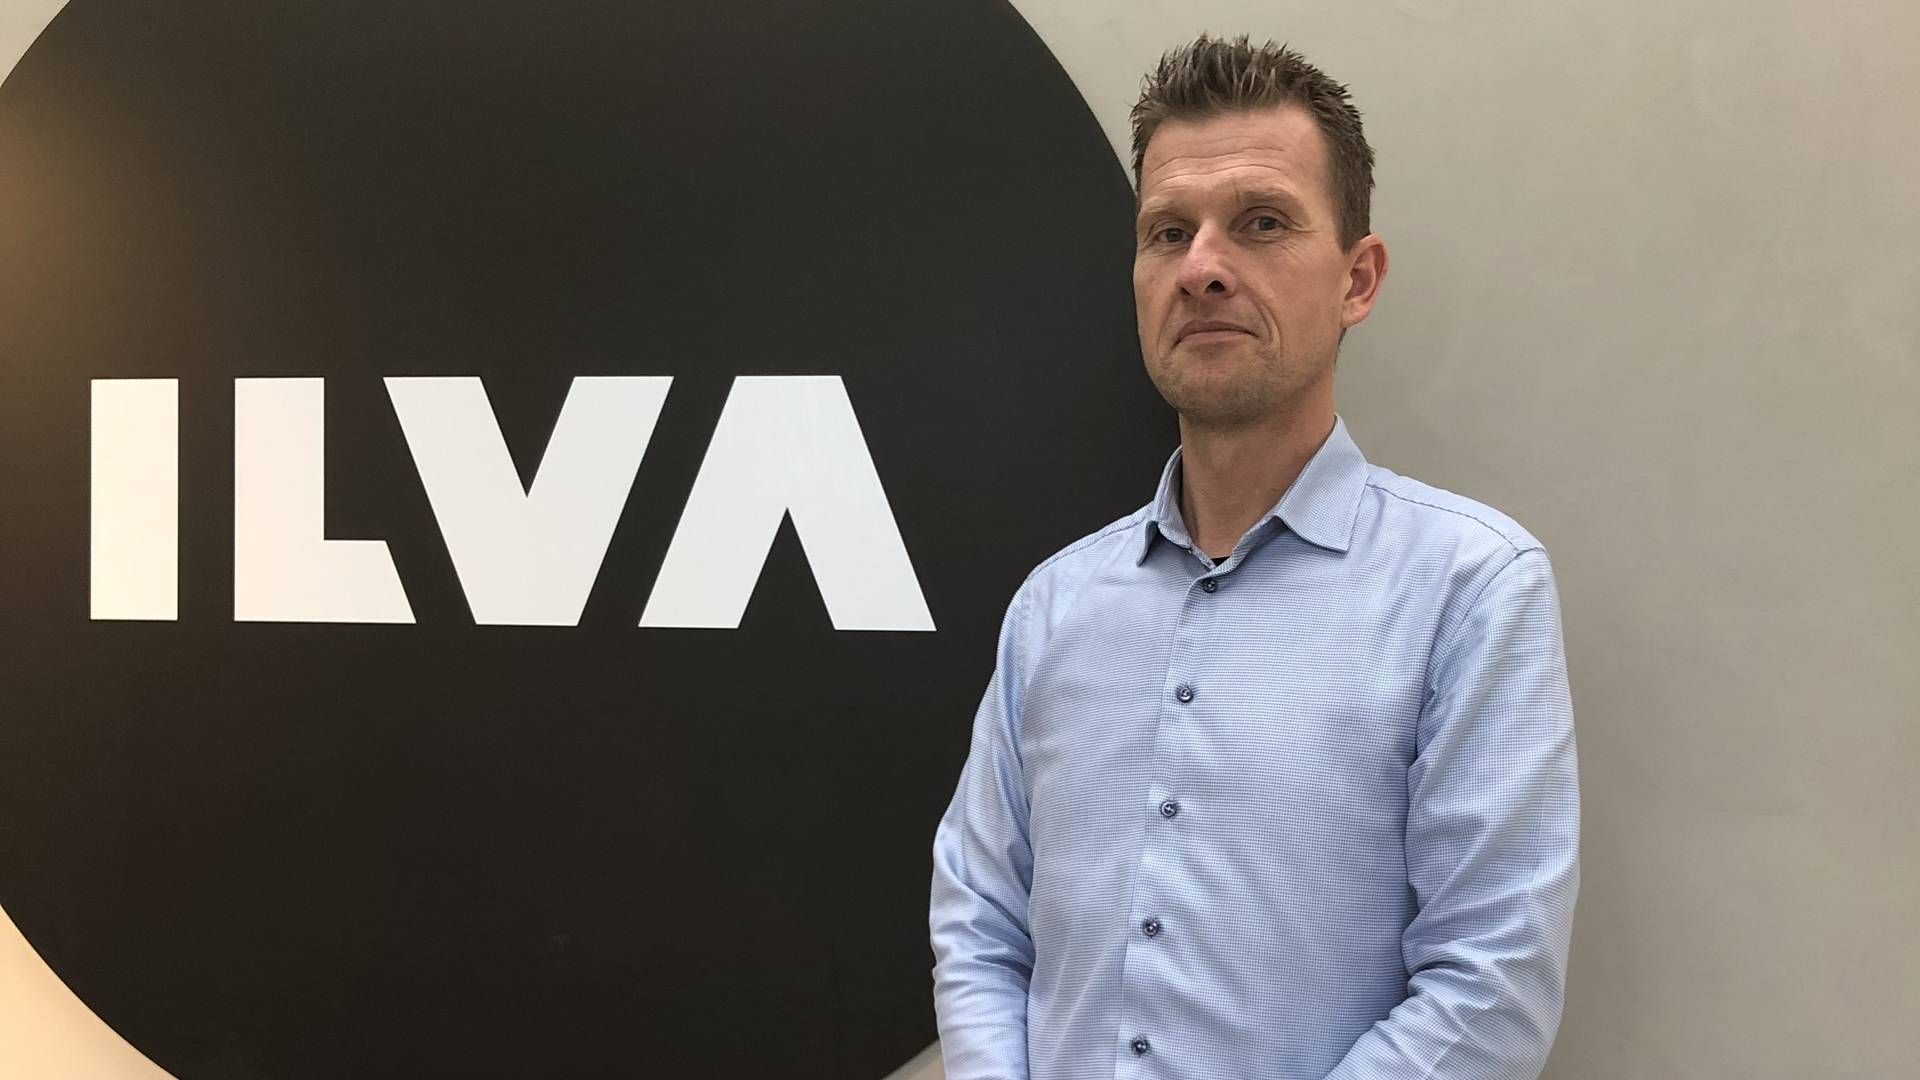 Adm. direktør for Ilva, Martin Hallund. | Foto: PR/Ilva